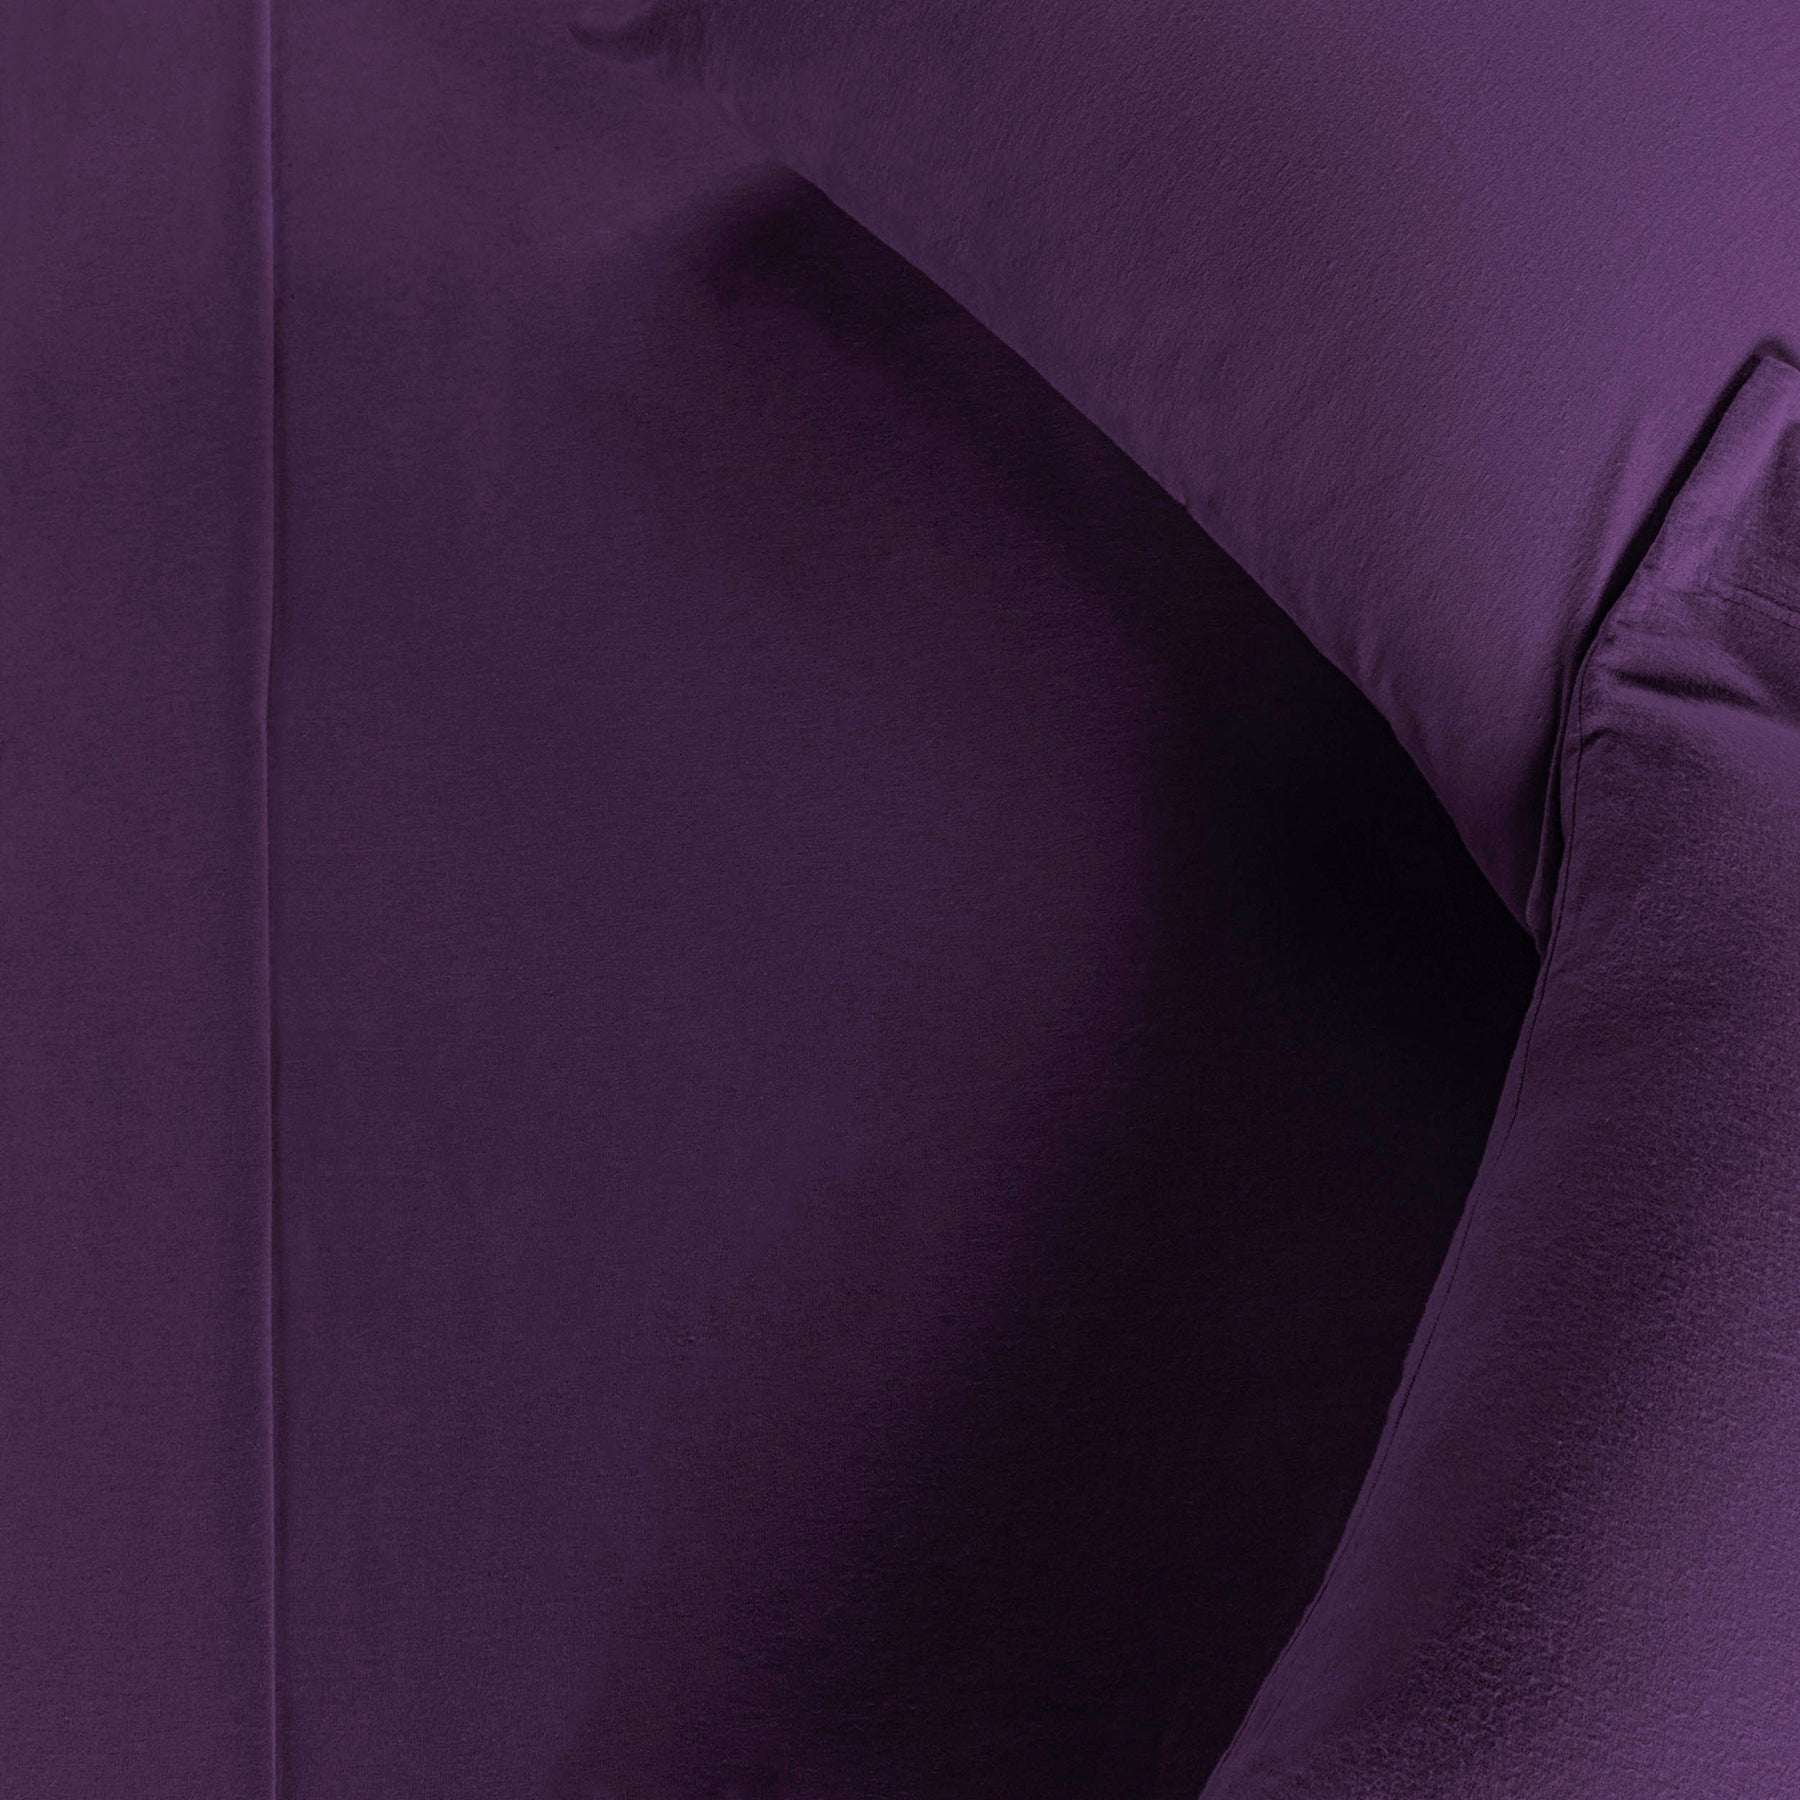 Solid Flannel Cotton Soft Warm Deep Pocket Sheet Set - Purple